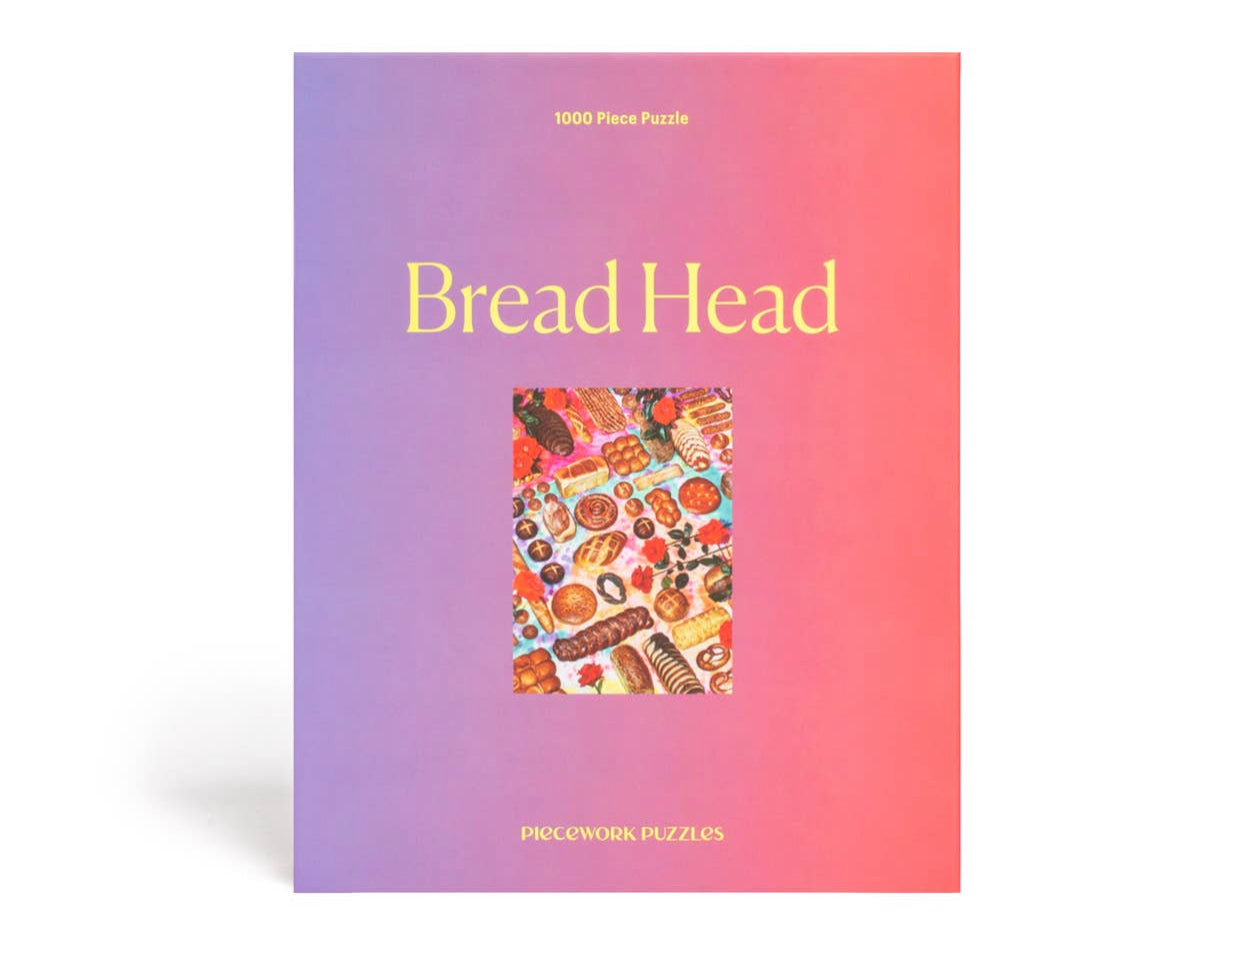 Bread Head 1000 piece puzzle by Pieceworks